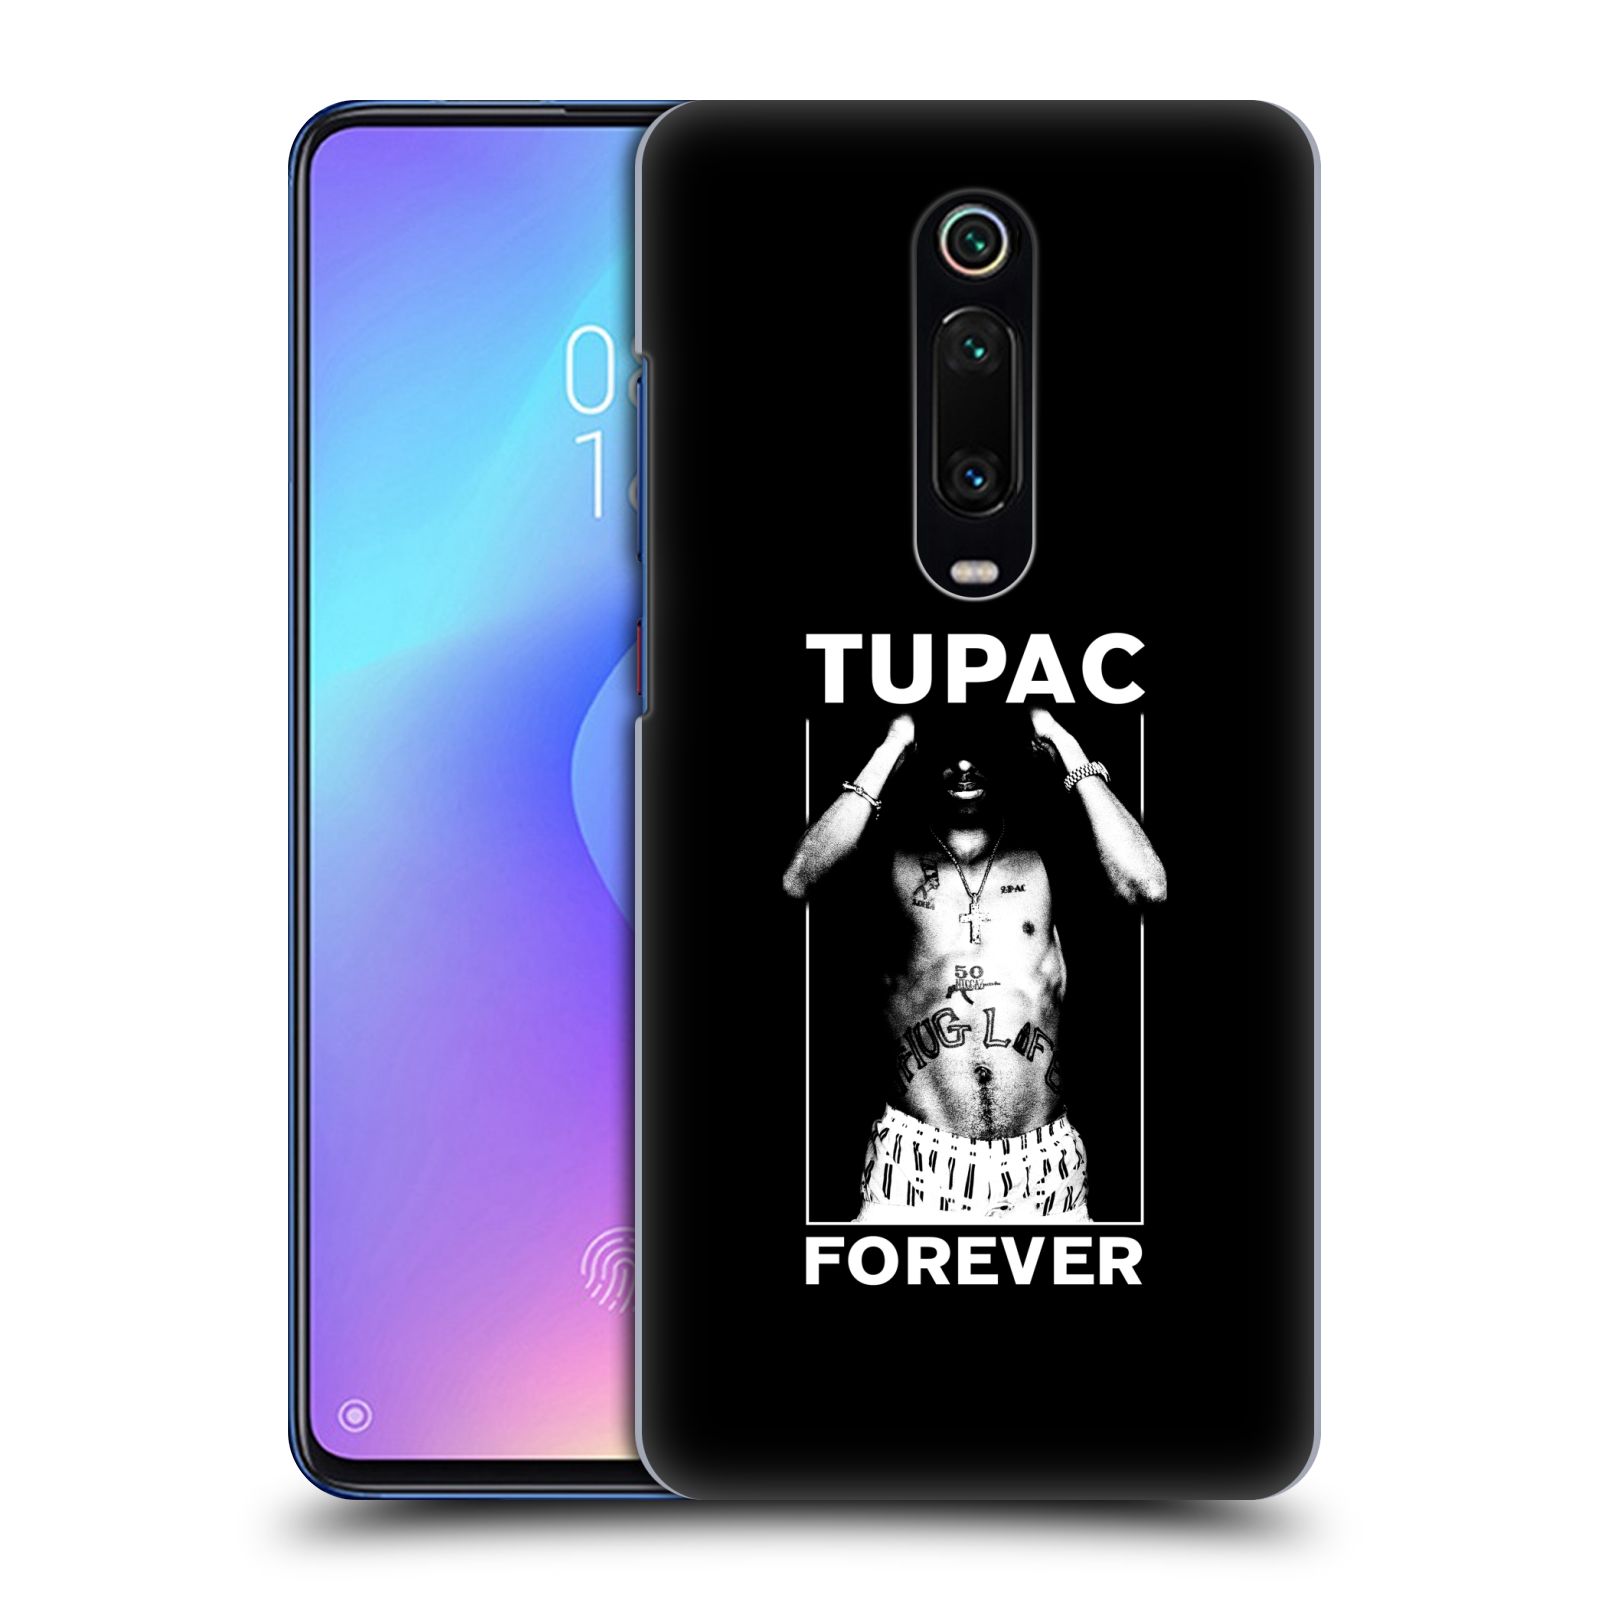 Pouzdro na mobil Xiaomi Mi 9T PRO - HEAD CASE - Zpěvák rapper Tupac Shakur 2Pac bílý popisek FOREVER